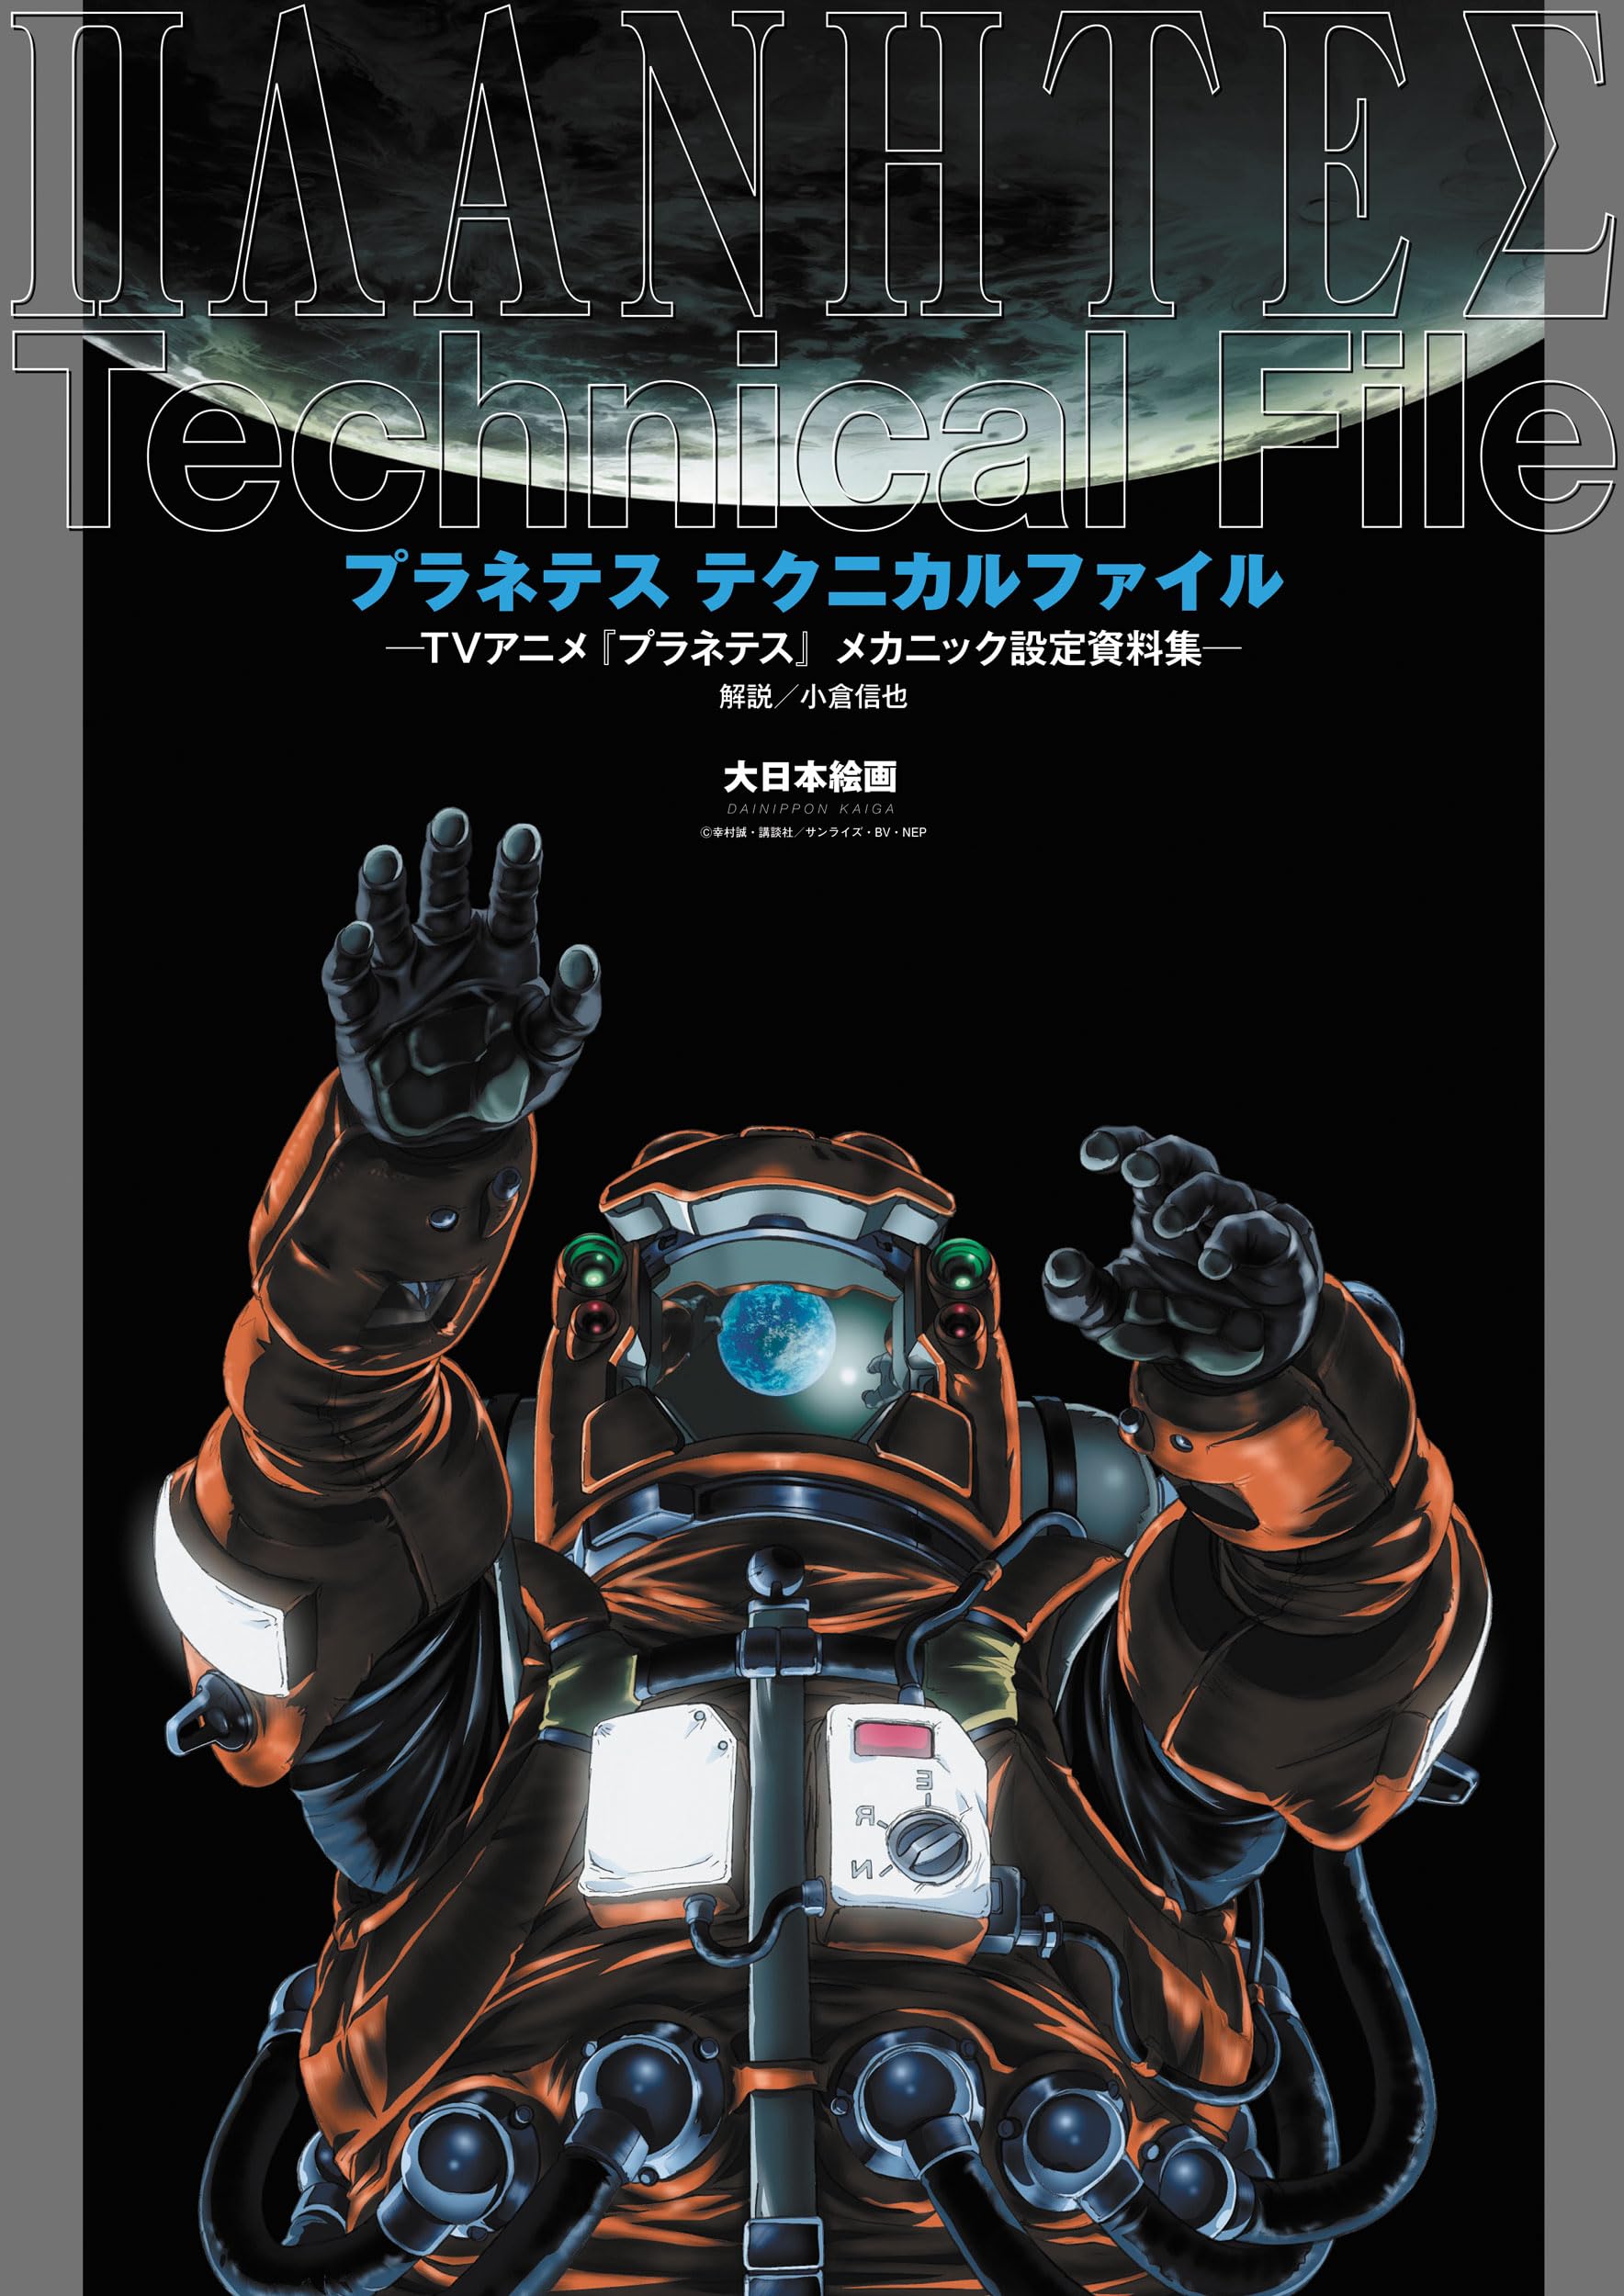 Catsuka Shopping - Planetes TV Anime Technical File - Mechanic Setting Book